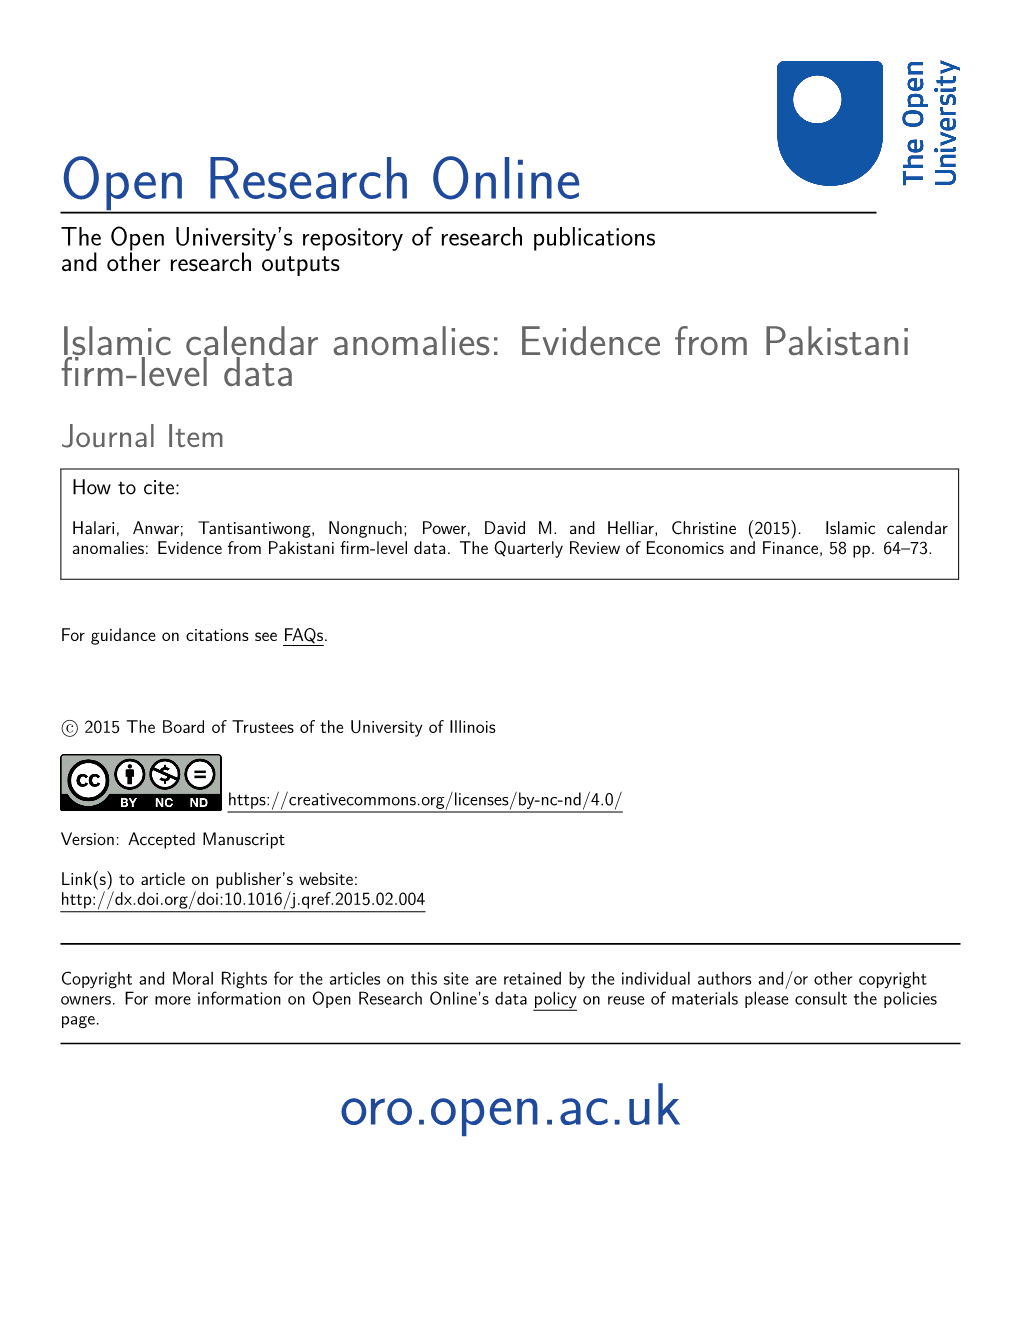 Islamic Calendar Anomalies: Evidence from Pakistani ﬁrm-Level Data Journal Item